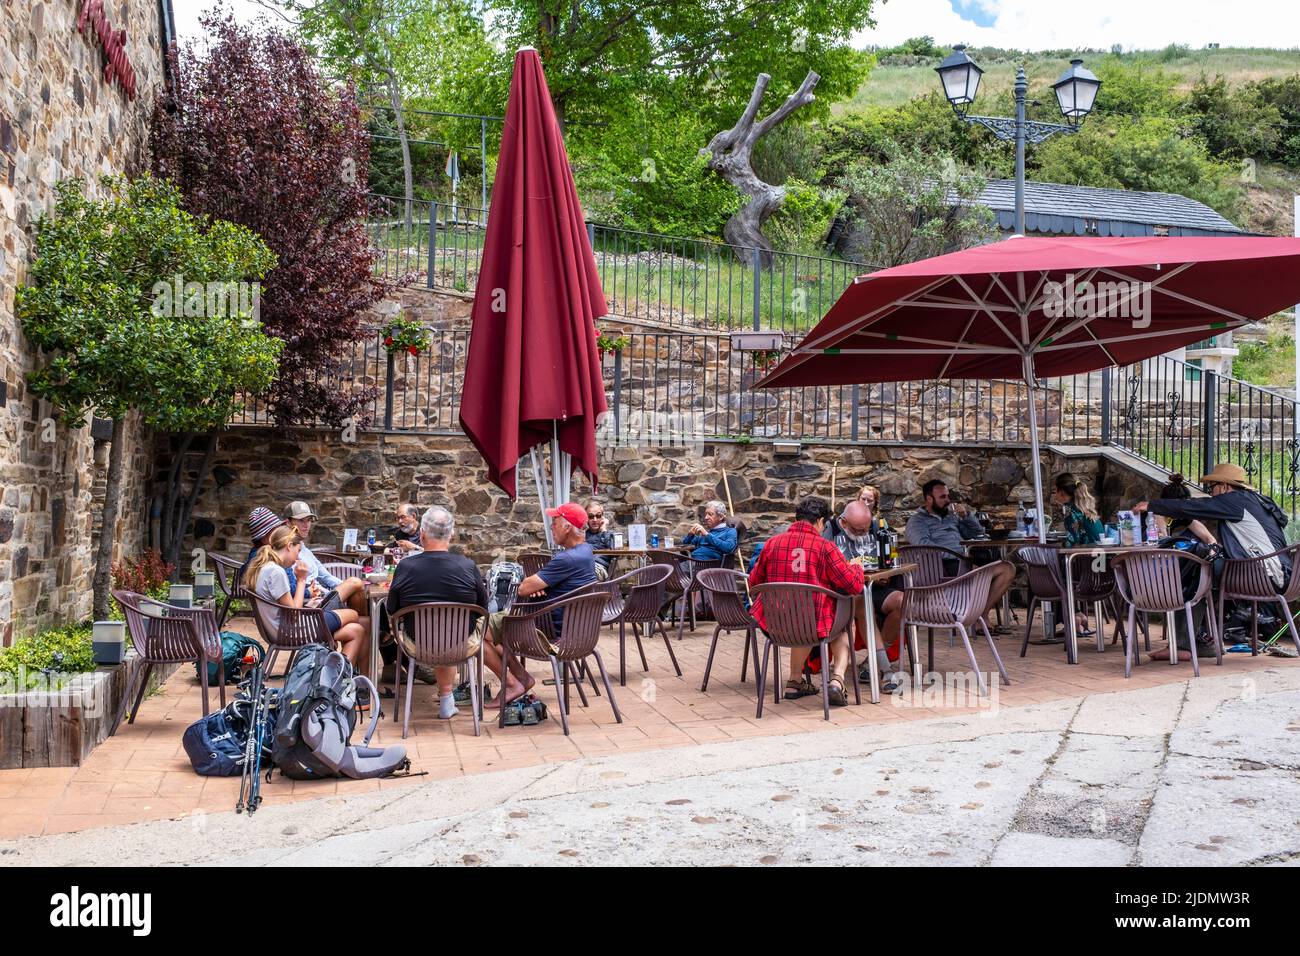 Spanien, El Acebo, Castilla y Leon. Wanderer im Outdoor Cafe Rastplatz. Stockfoto